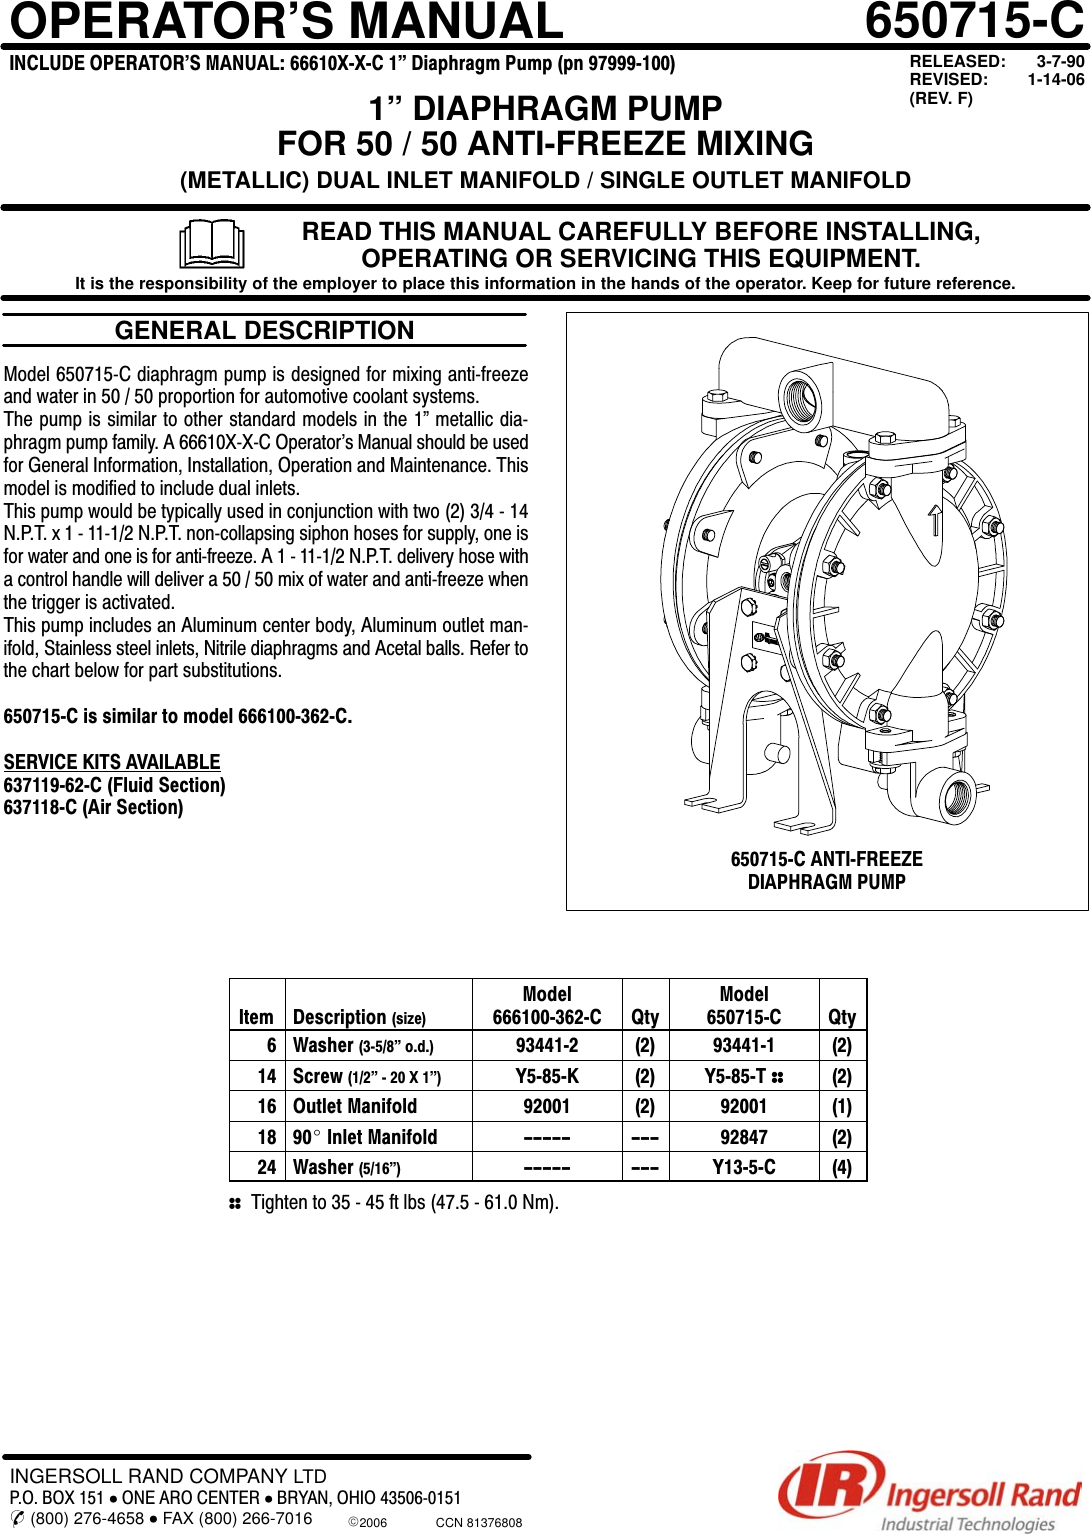 Ingersoll Rand 650715 C Users Manual 650715.C(f)